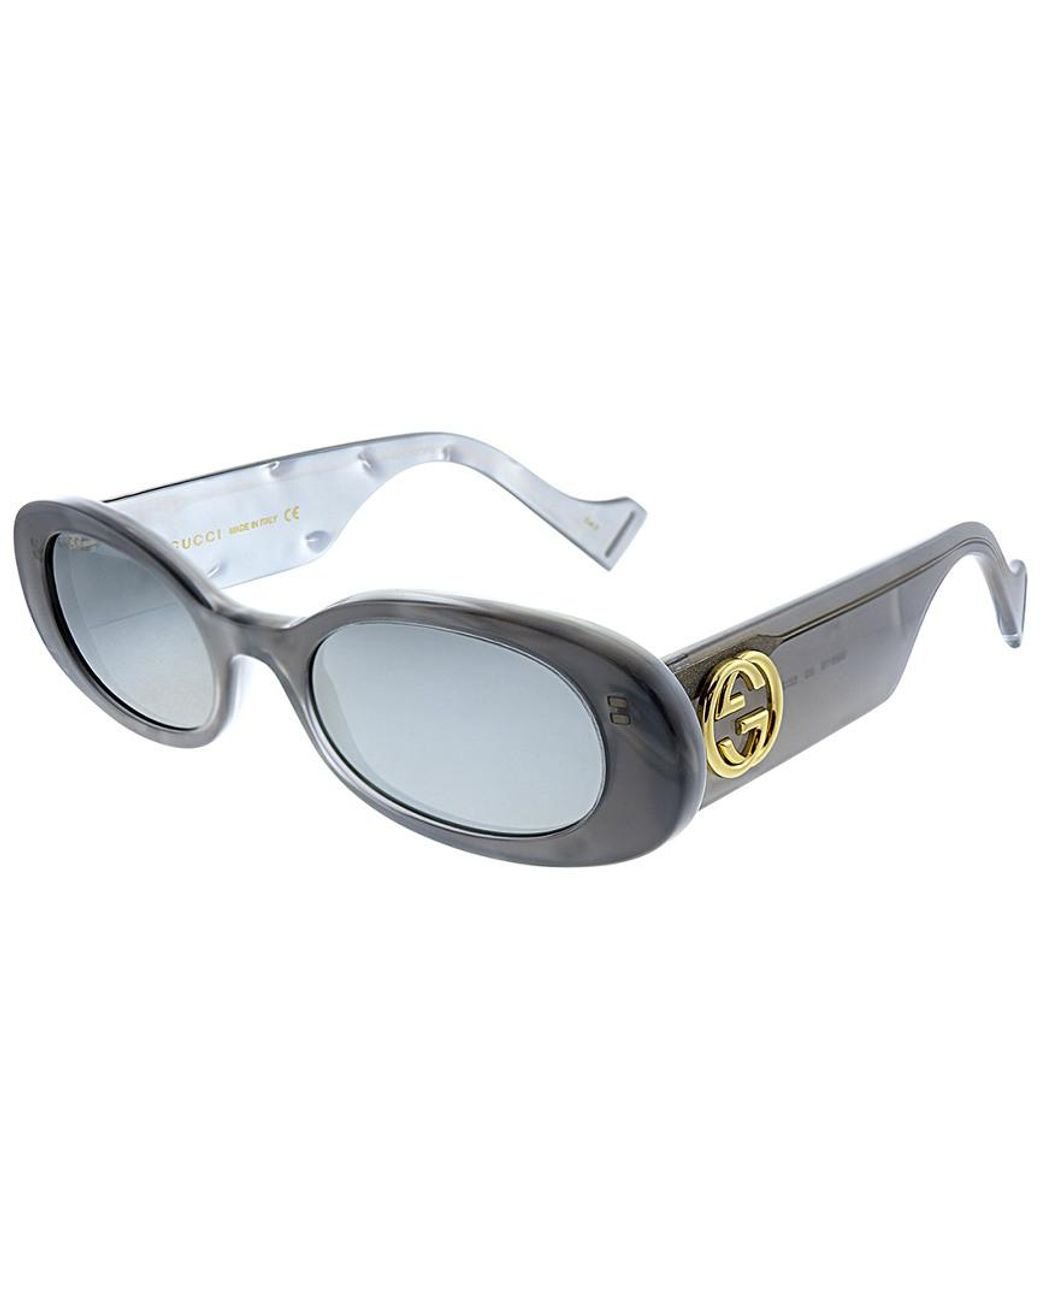 Gucci GG0517S 002 Women's Sunglasses Grey Size 52 - Free Rx Lenses in ...